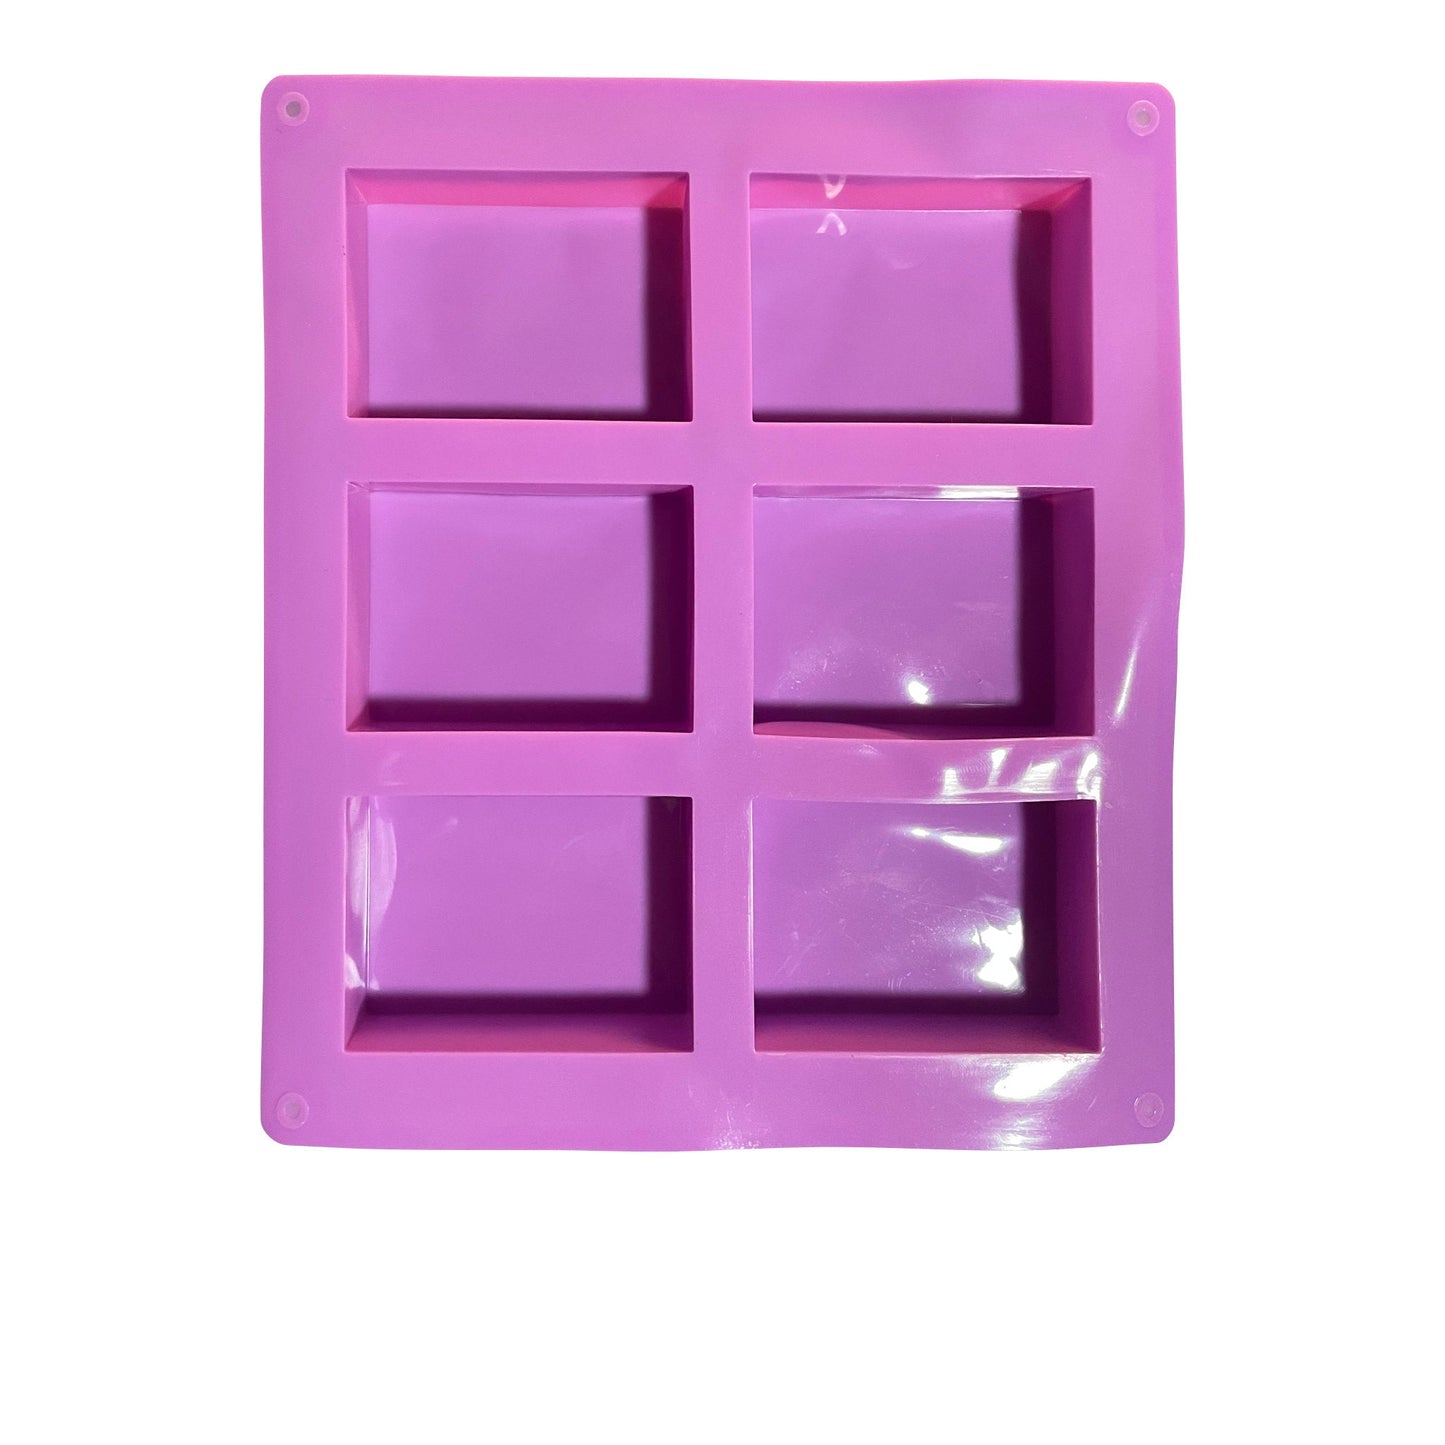 Purple Assorted Round 6-Cavity Soap Mold